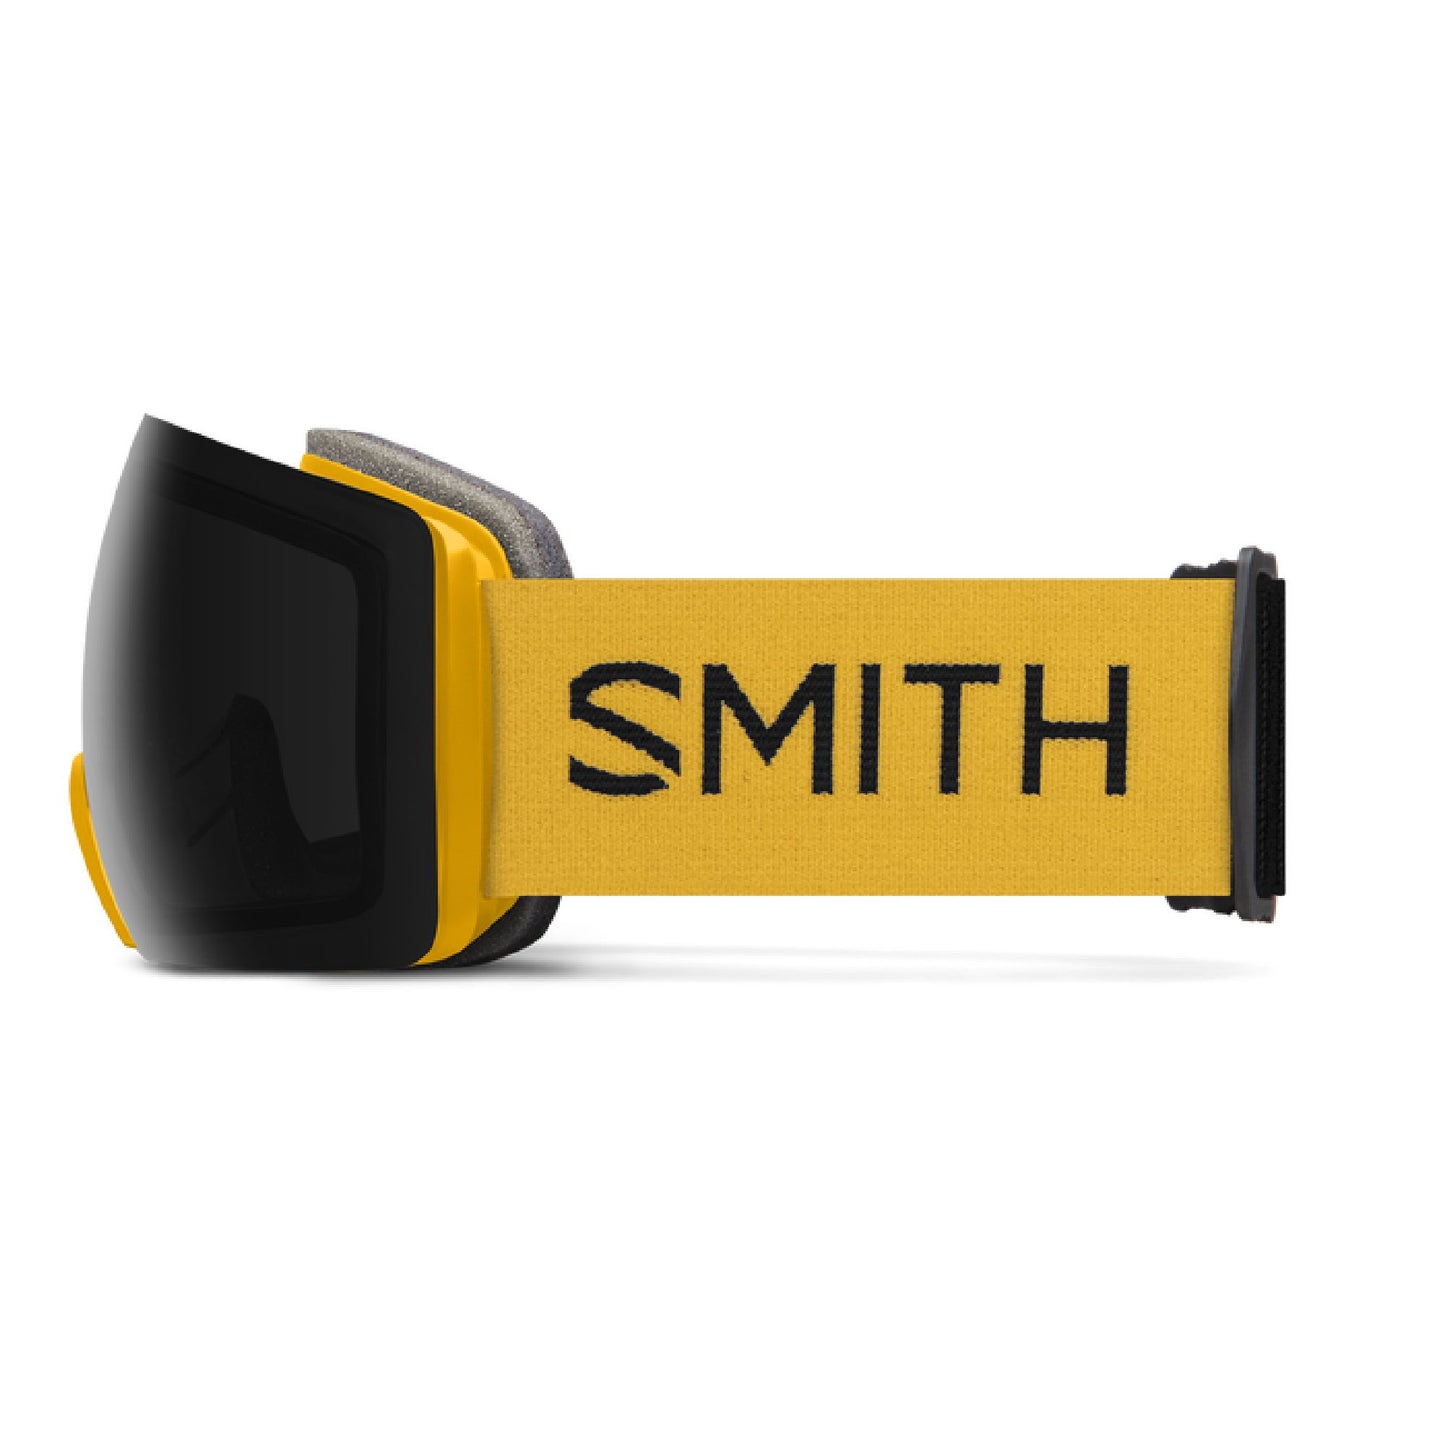 Smith Skyline XL Low Bridge Fit Snow Goggle Gold Bar Colorblock ChromaPop Sun Black - Smith Snow Goggles